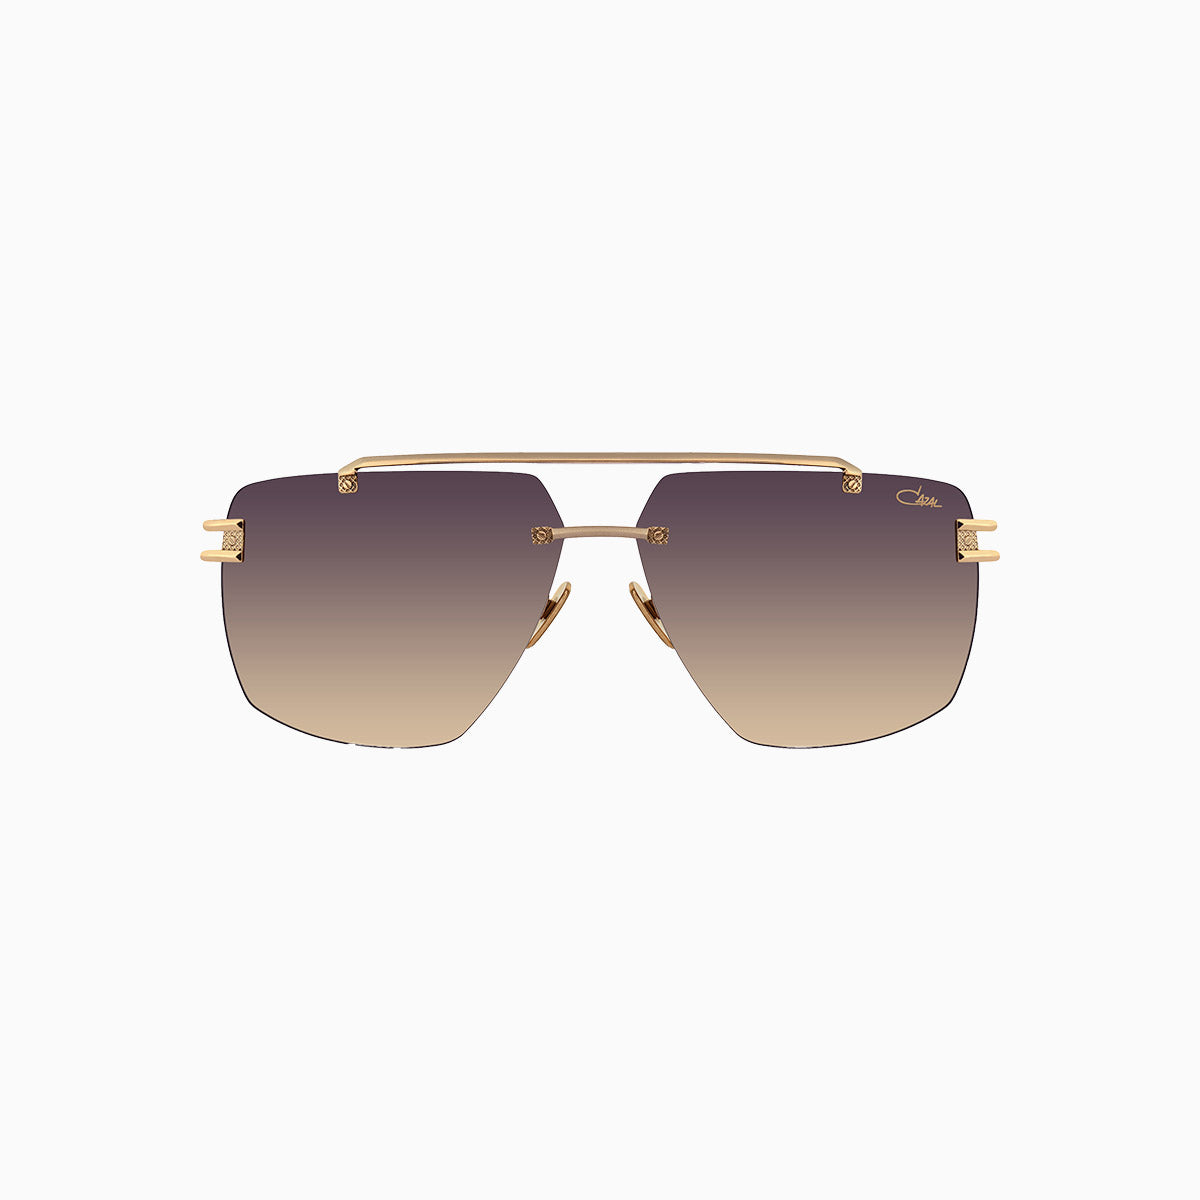 Cazel 9107 Black Gold Sunglasses